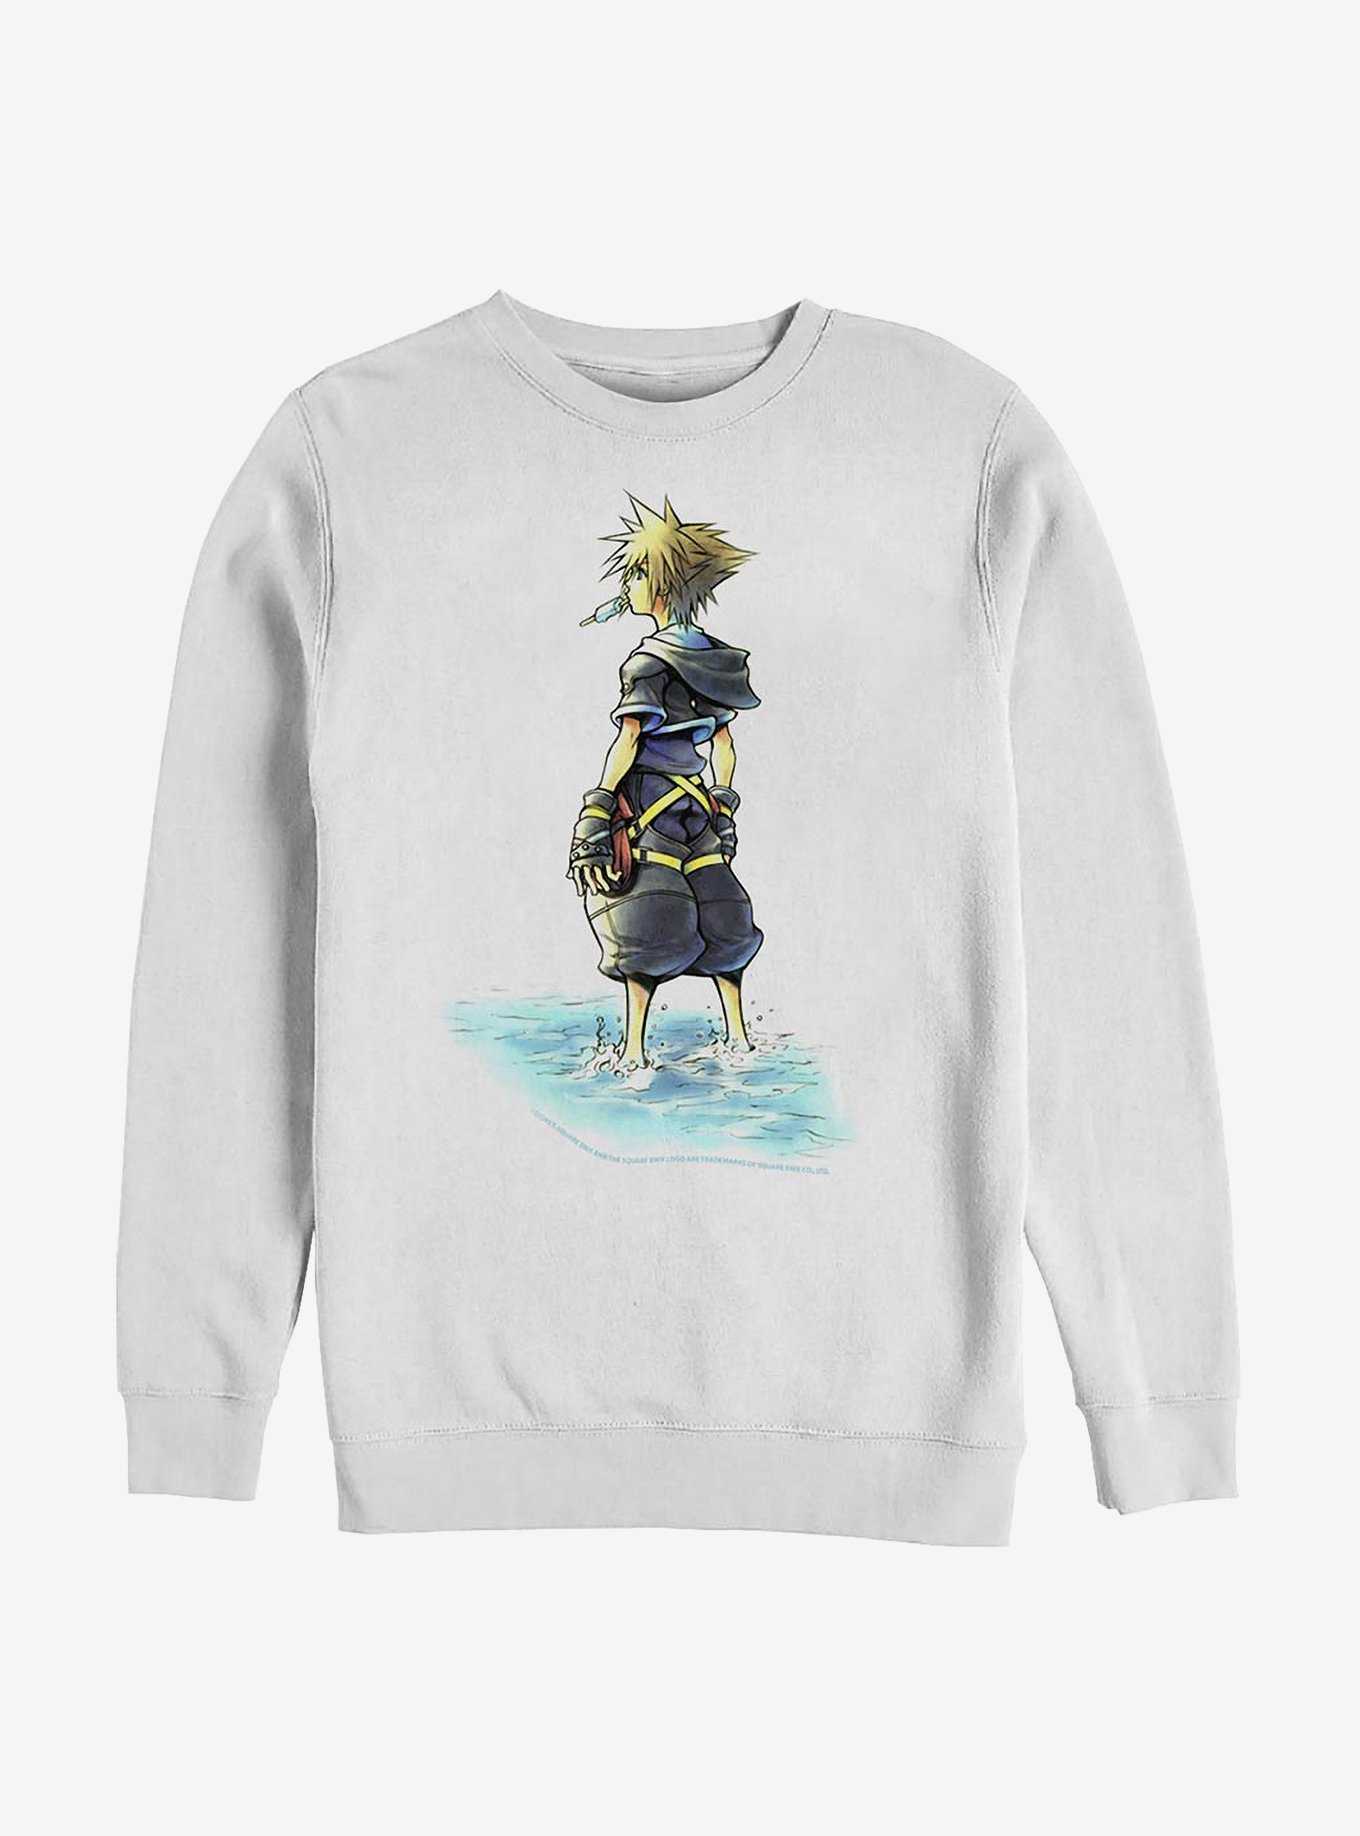 Disney Kingdom Hearts Feet Wet Sweatshirt, , hi-res